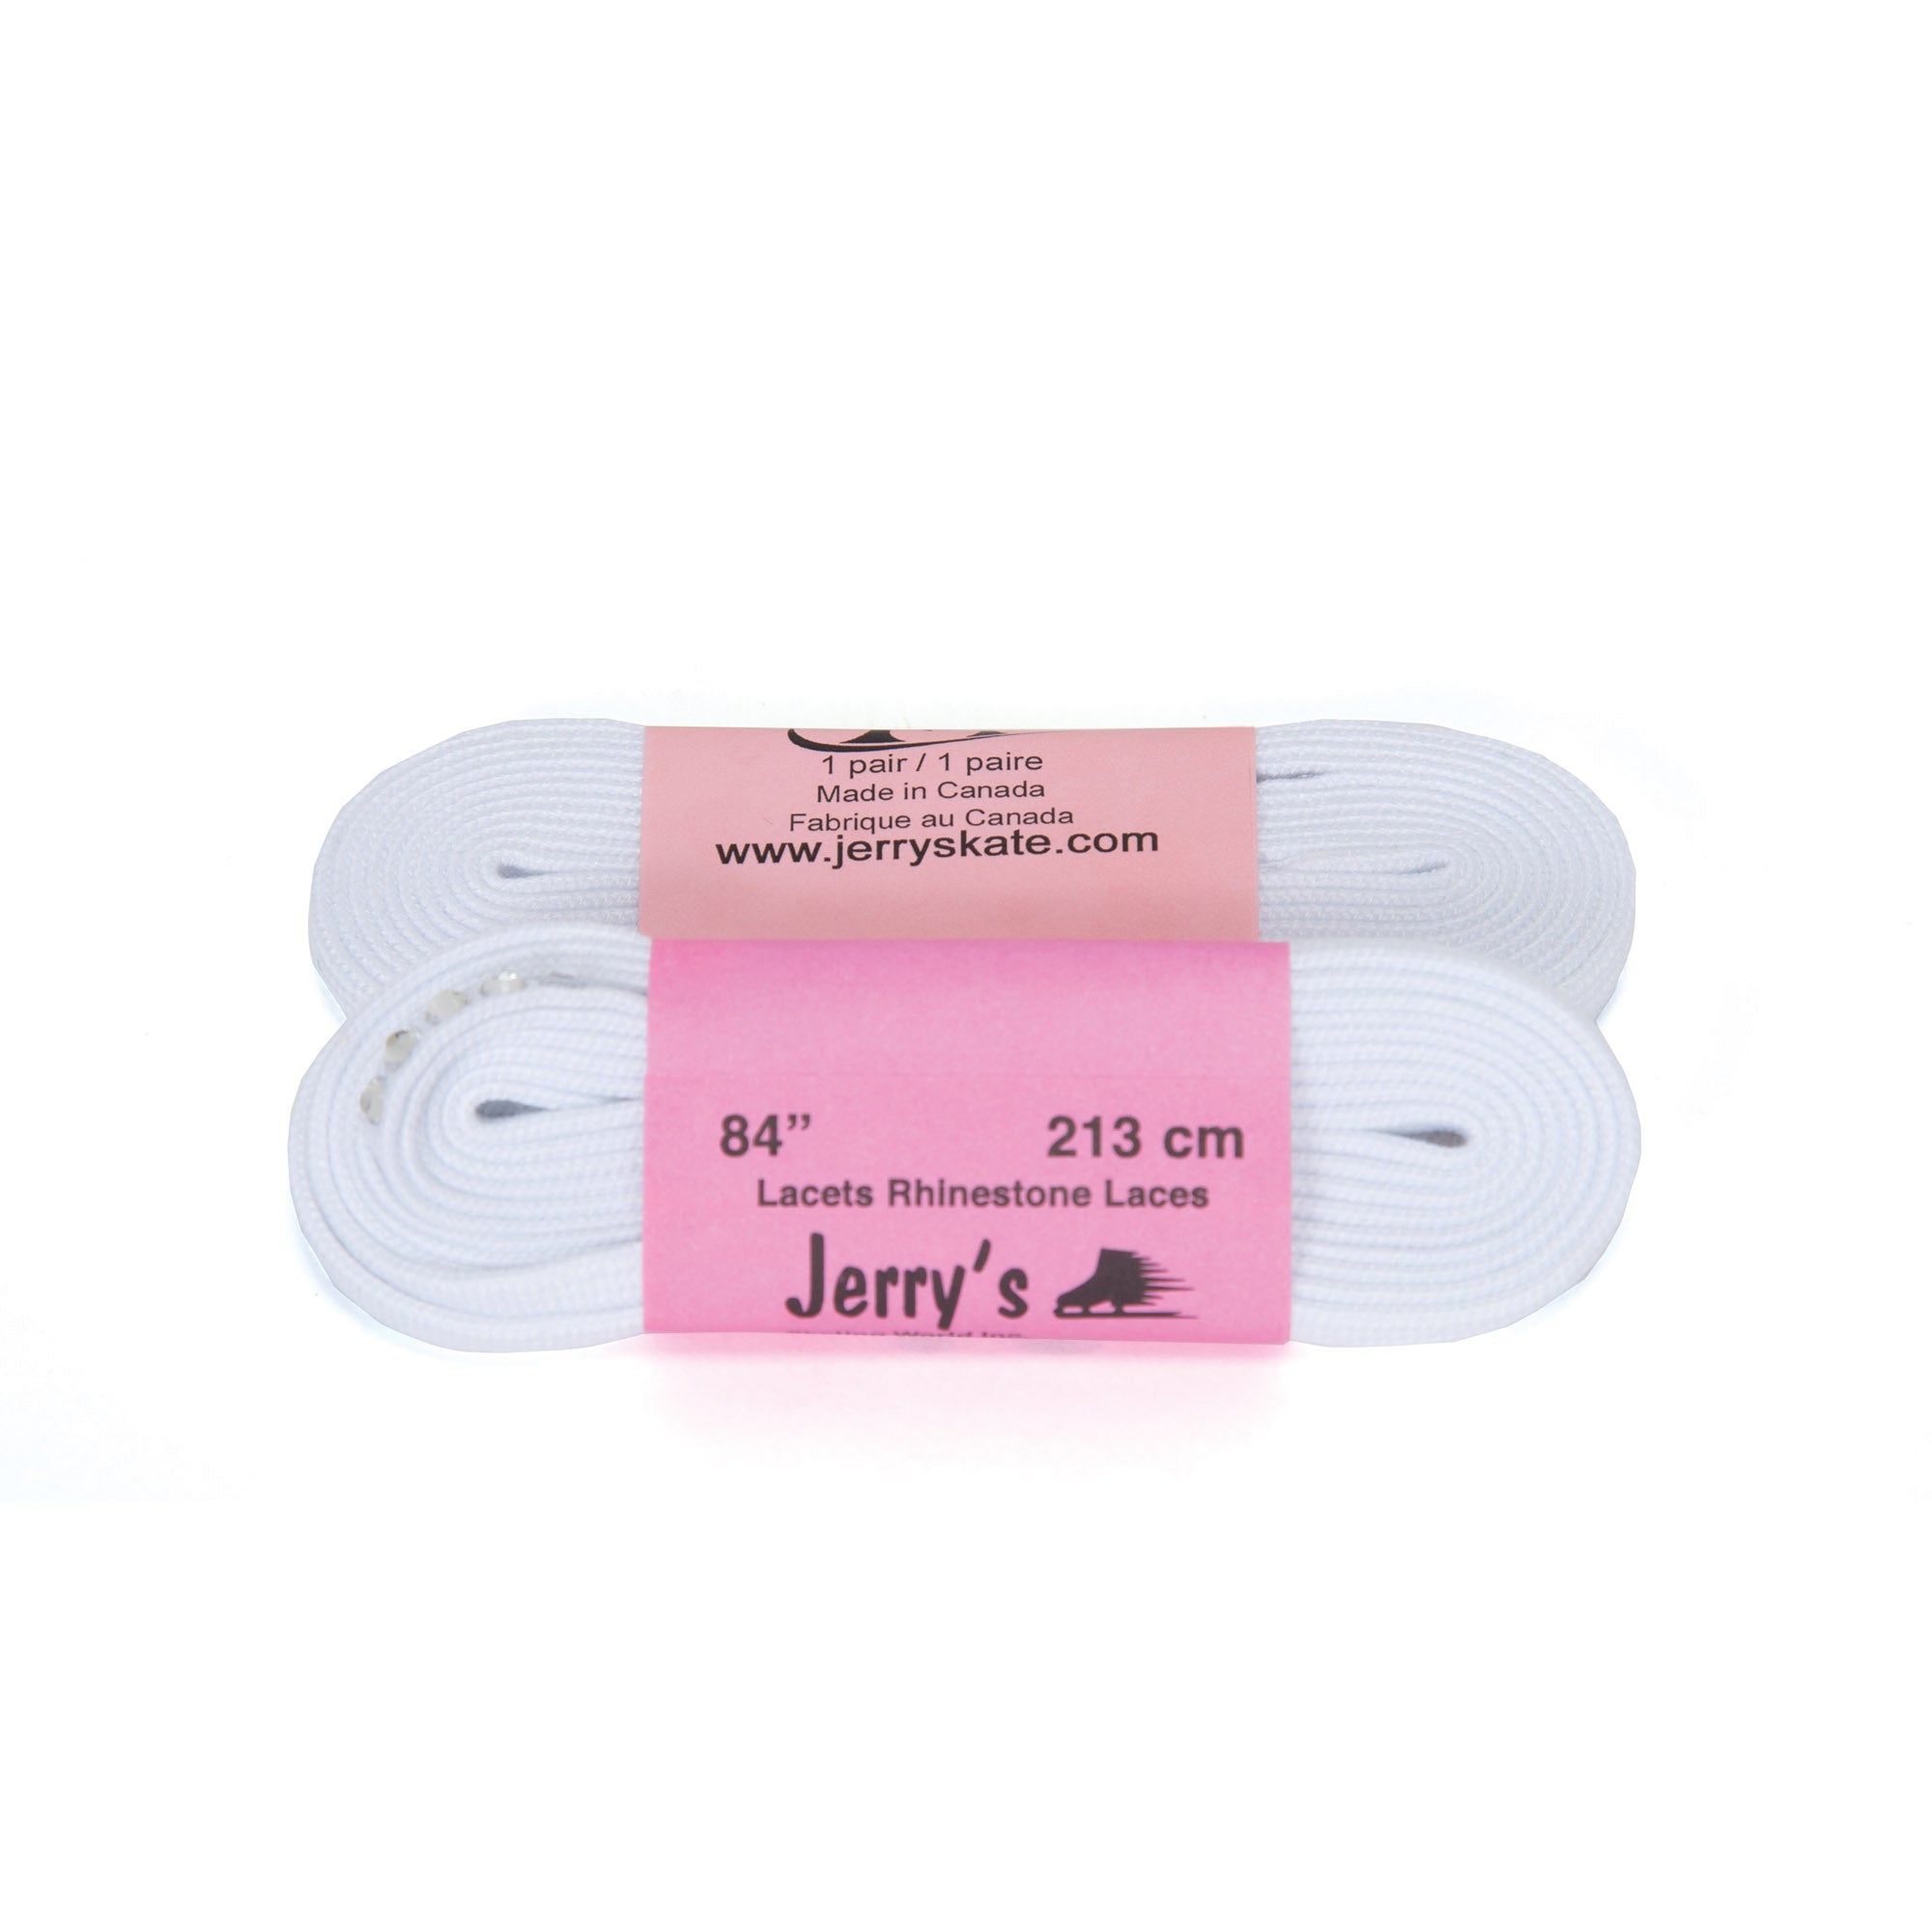 Jerry's 1205 Rhinestone Laces (Size: 84)